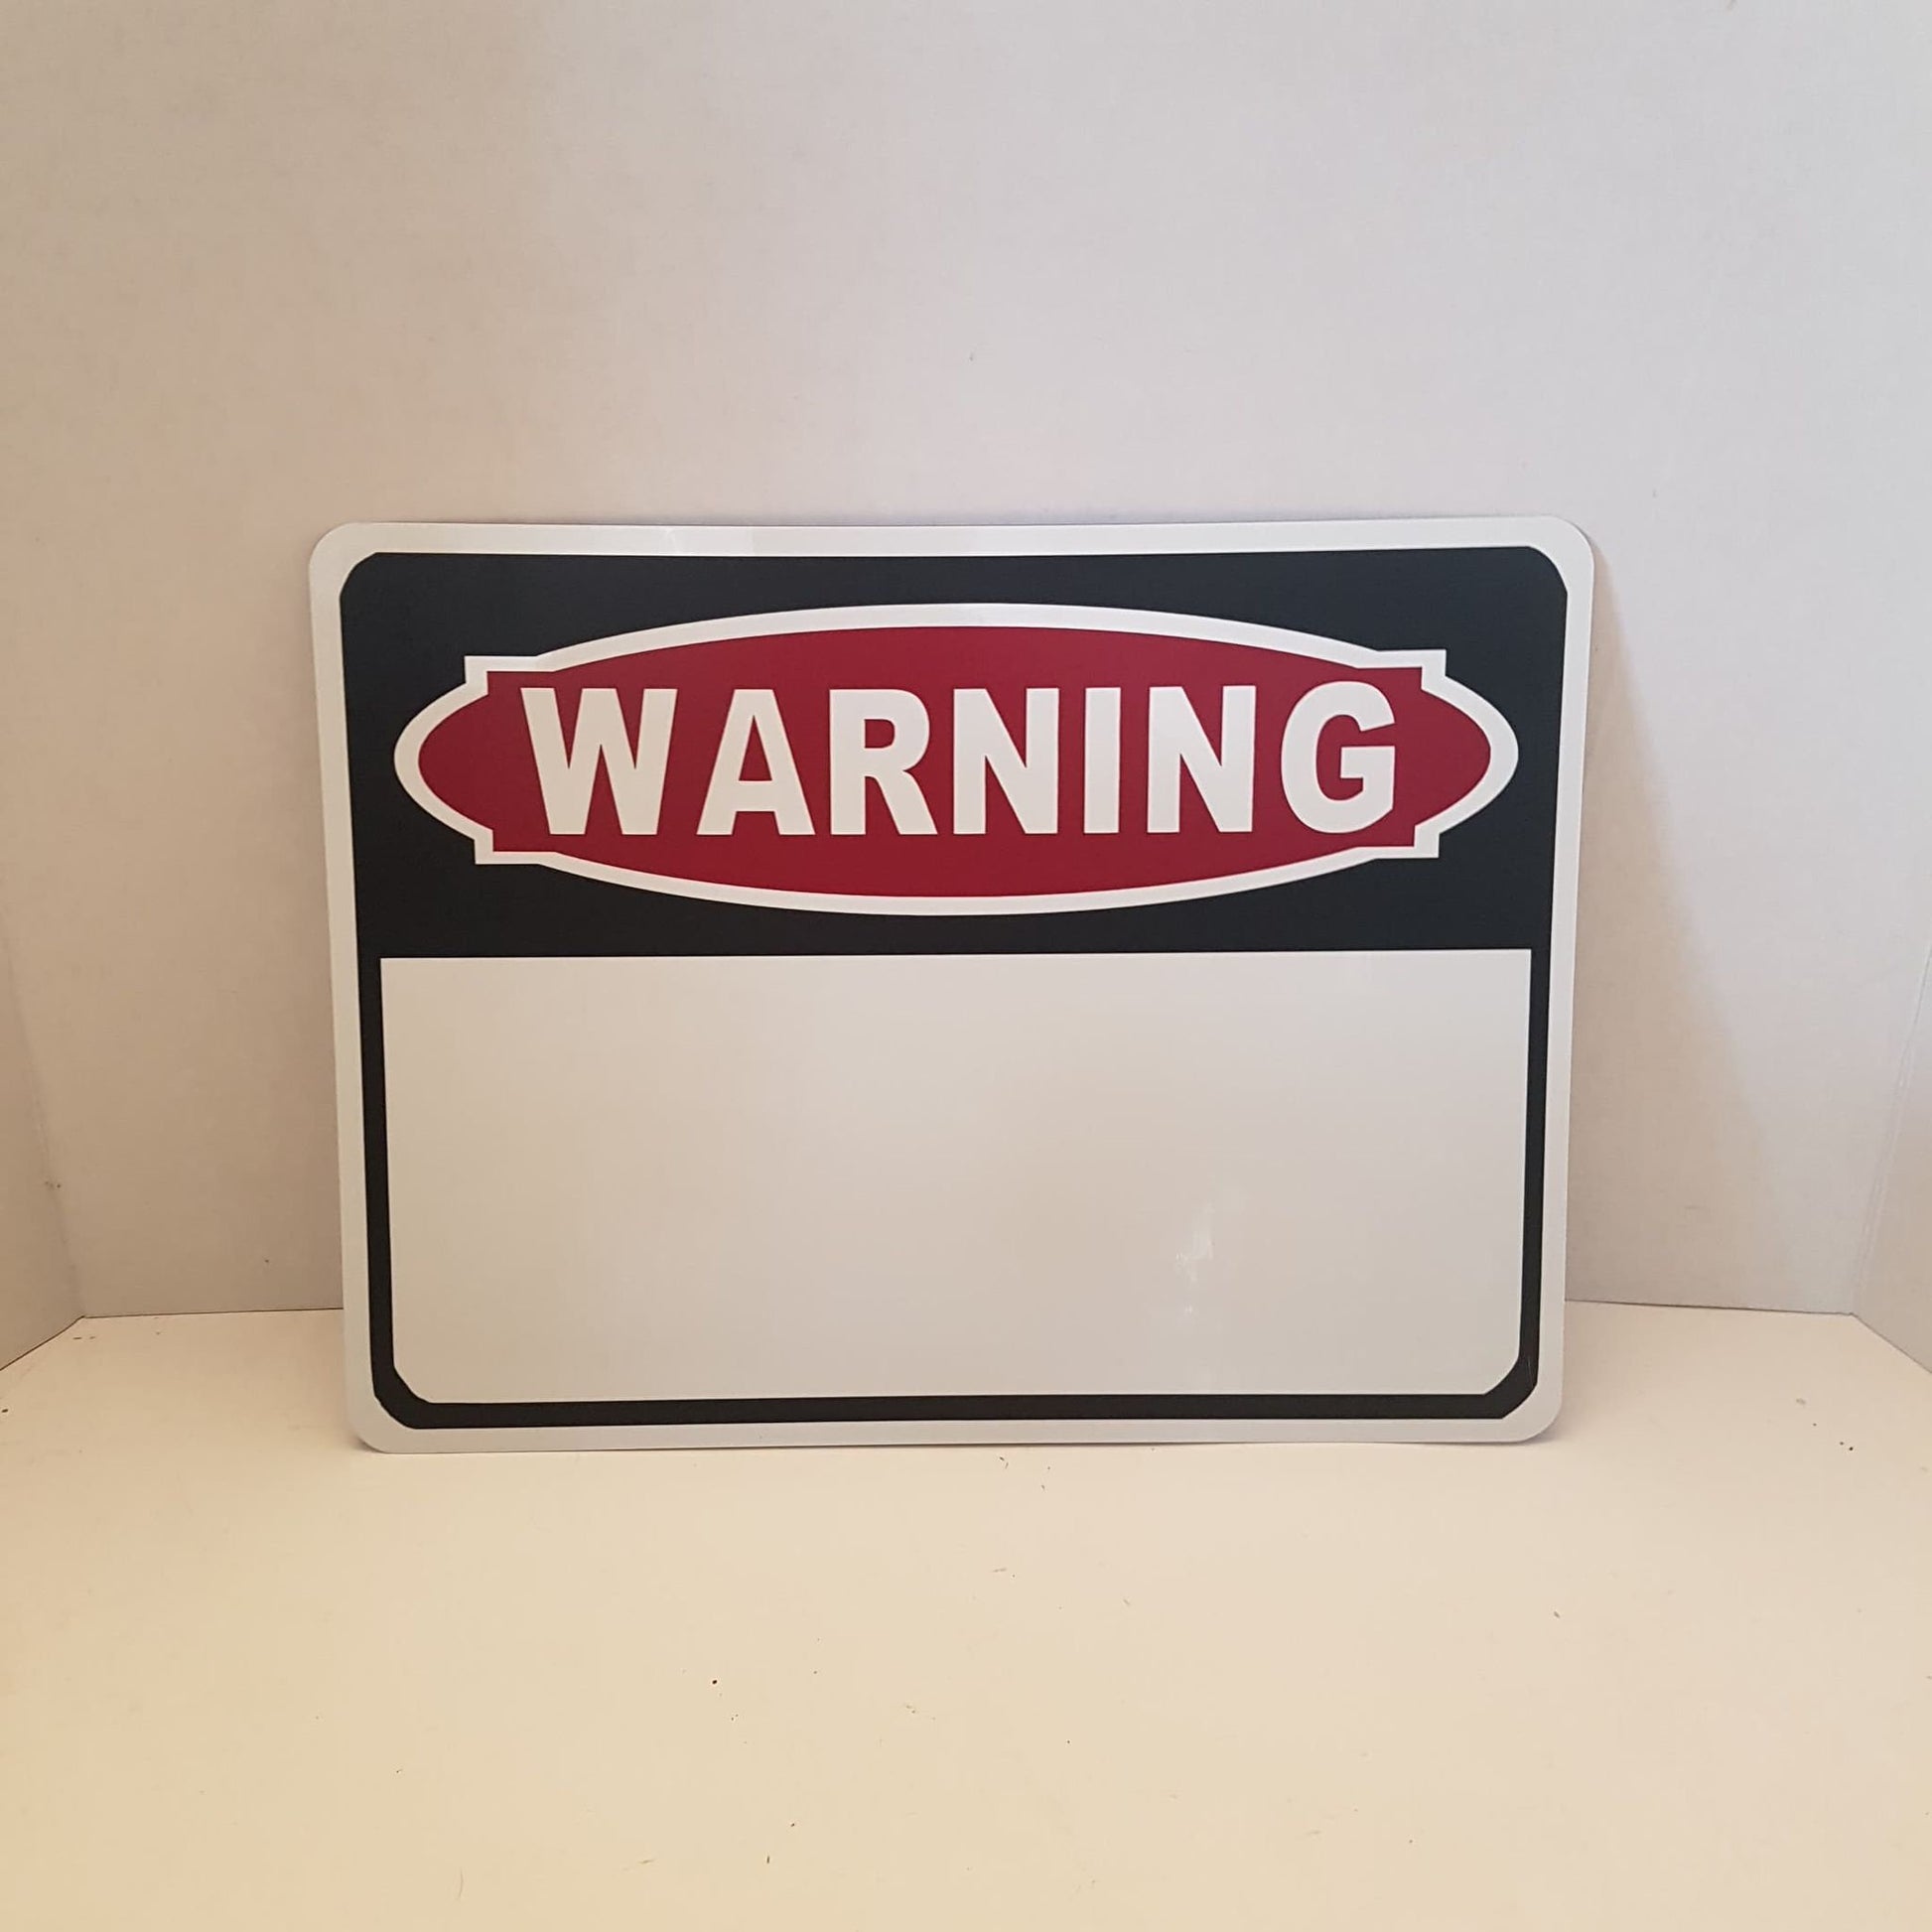 warning sign add you own warning / threat